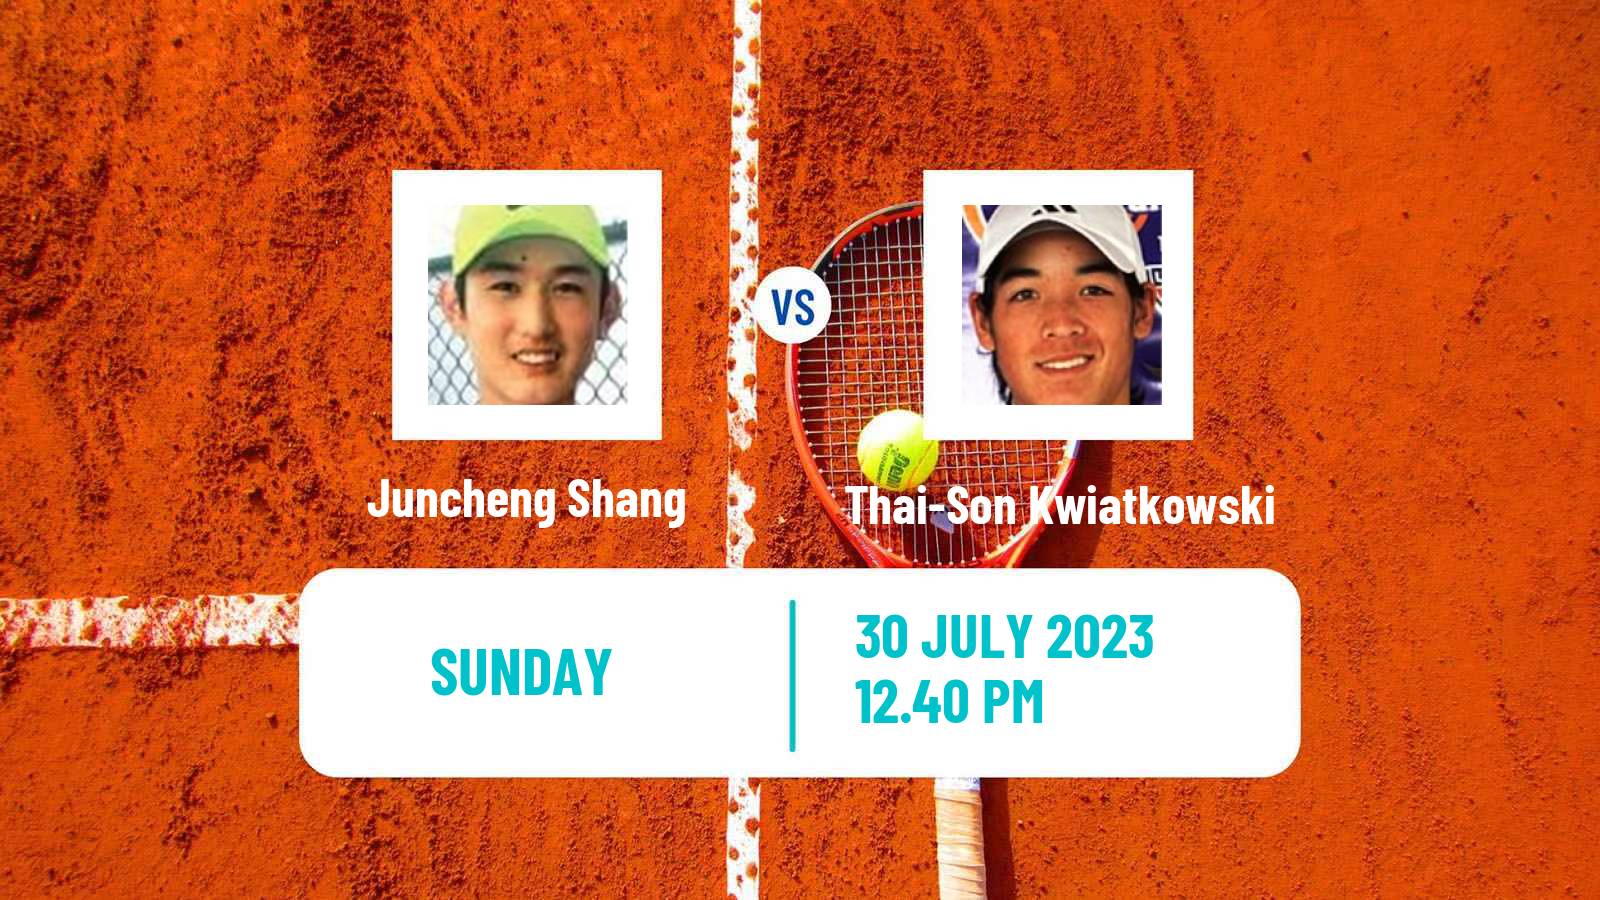 Tennis ATP Washington Juncheng Shang - Thai-Son Kwiatkowski